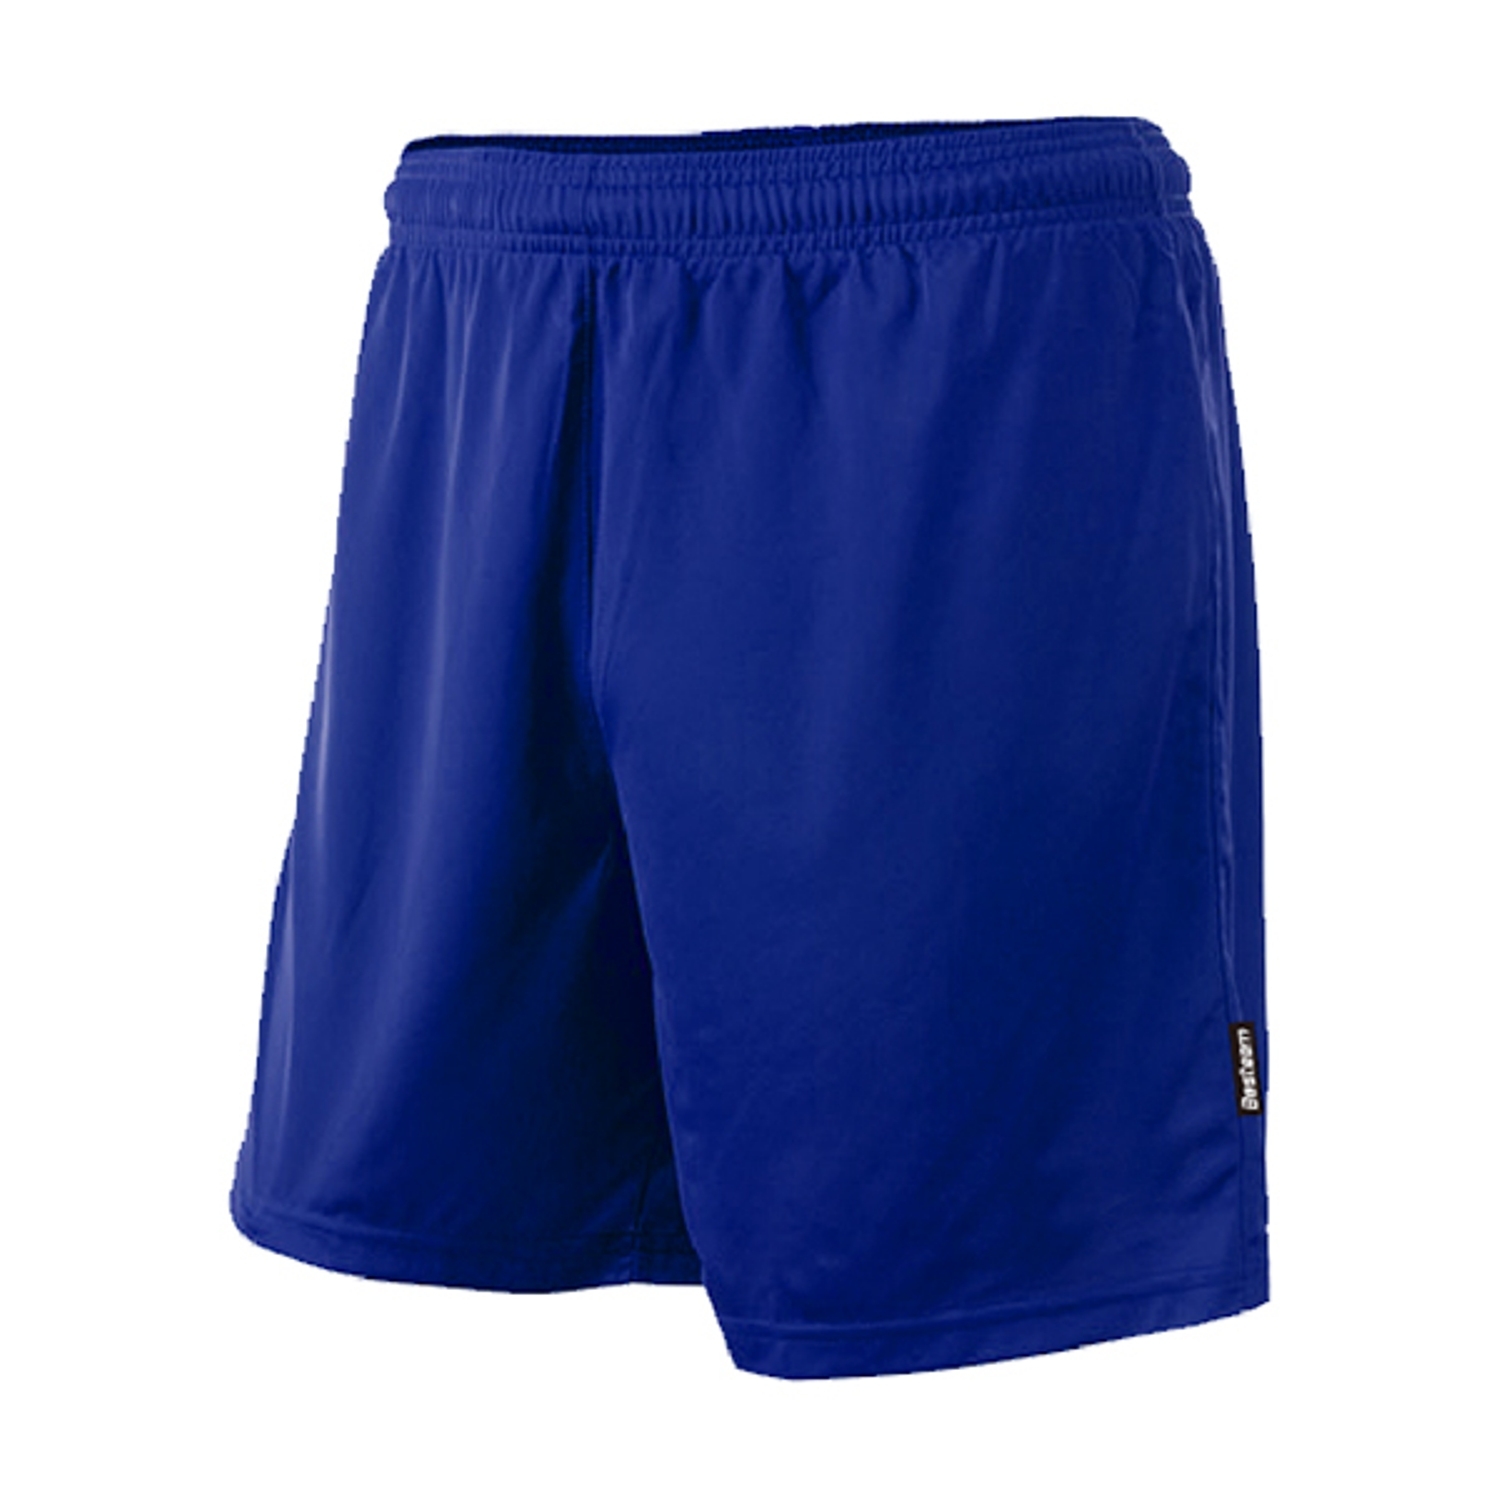 Besteam Porto Shorts: Royal Blue | Mike Pawley Sports